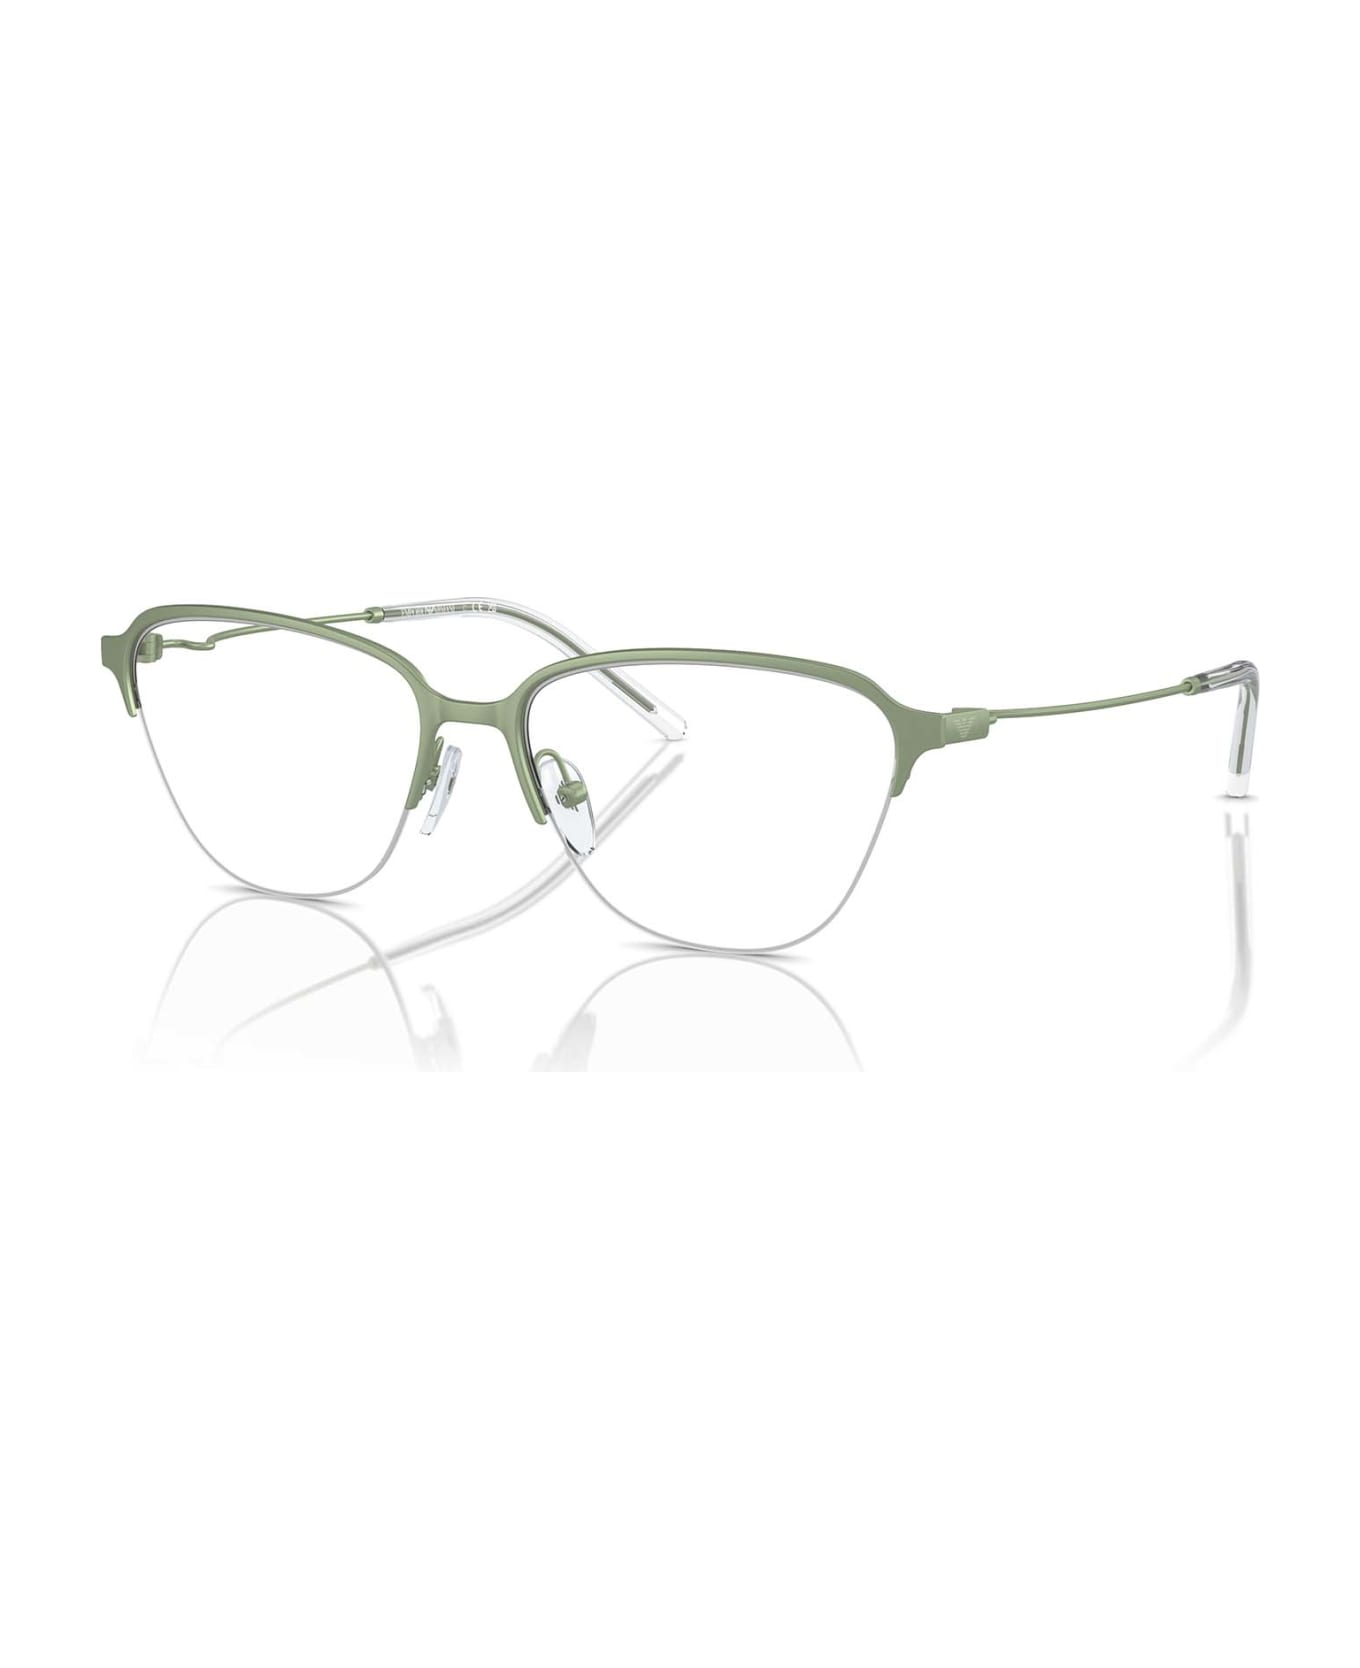 Emporio Armani Ea1161 Metal Green Glasses - Metal Green